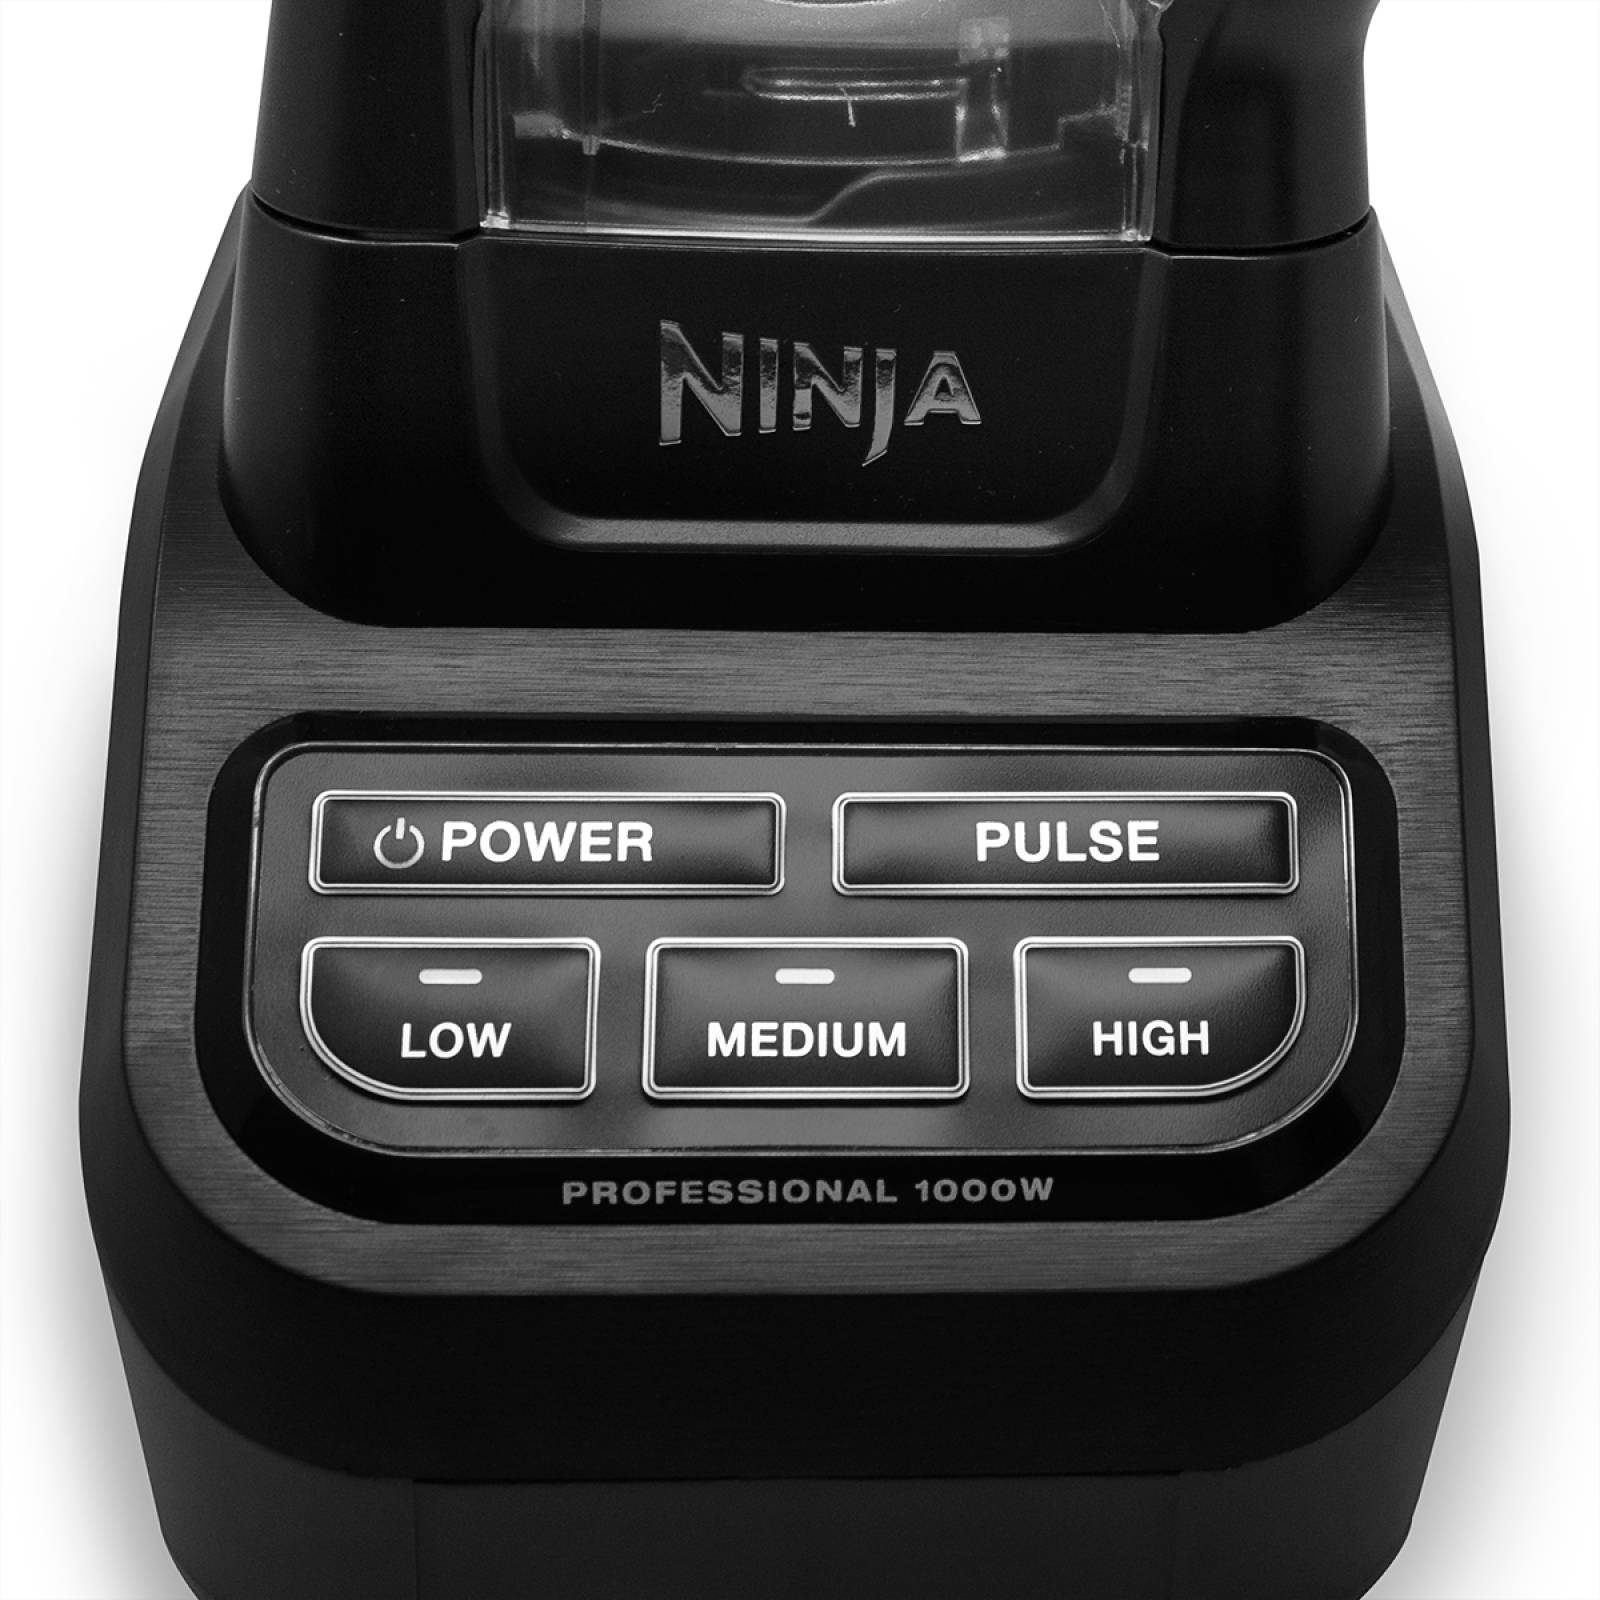 Licuadora Profesional Ninja 3 Velocidades 1000 W BL710WM